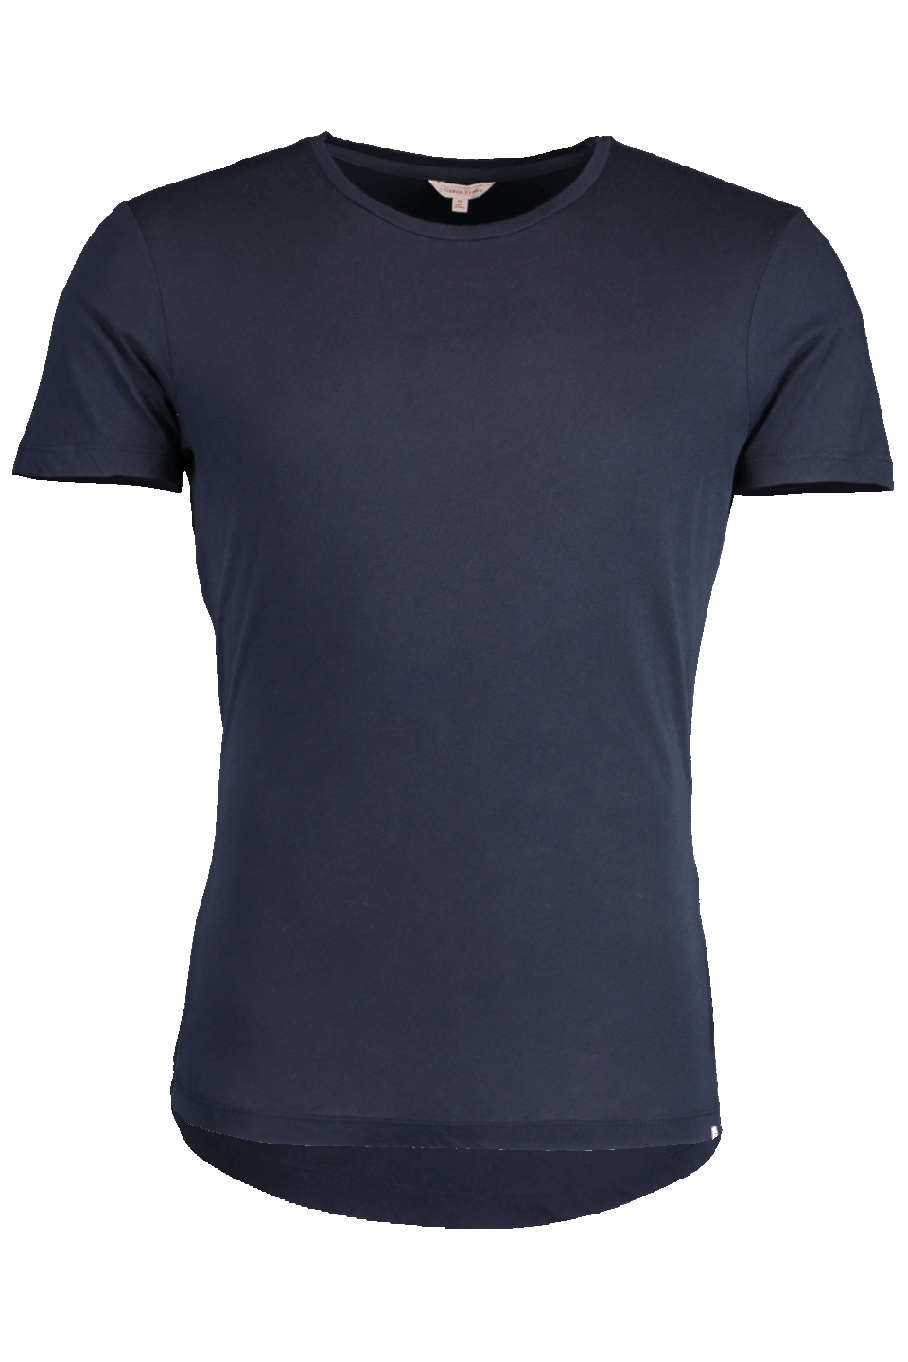 ORLEBAR BROWN-OB-T Navy T-Shirt-